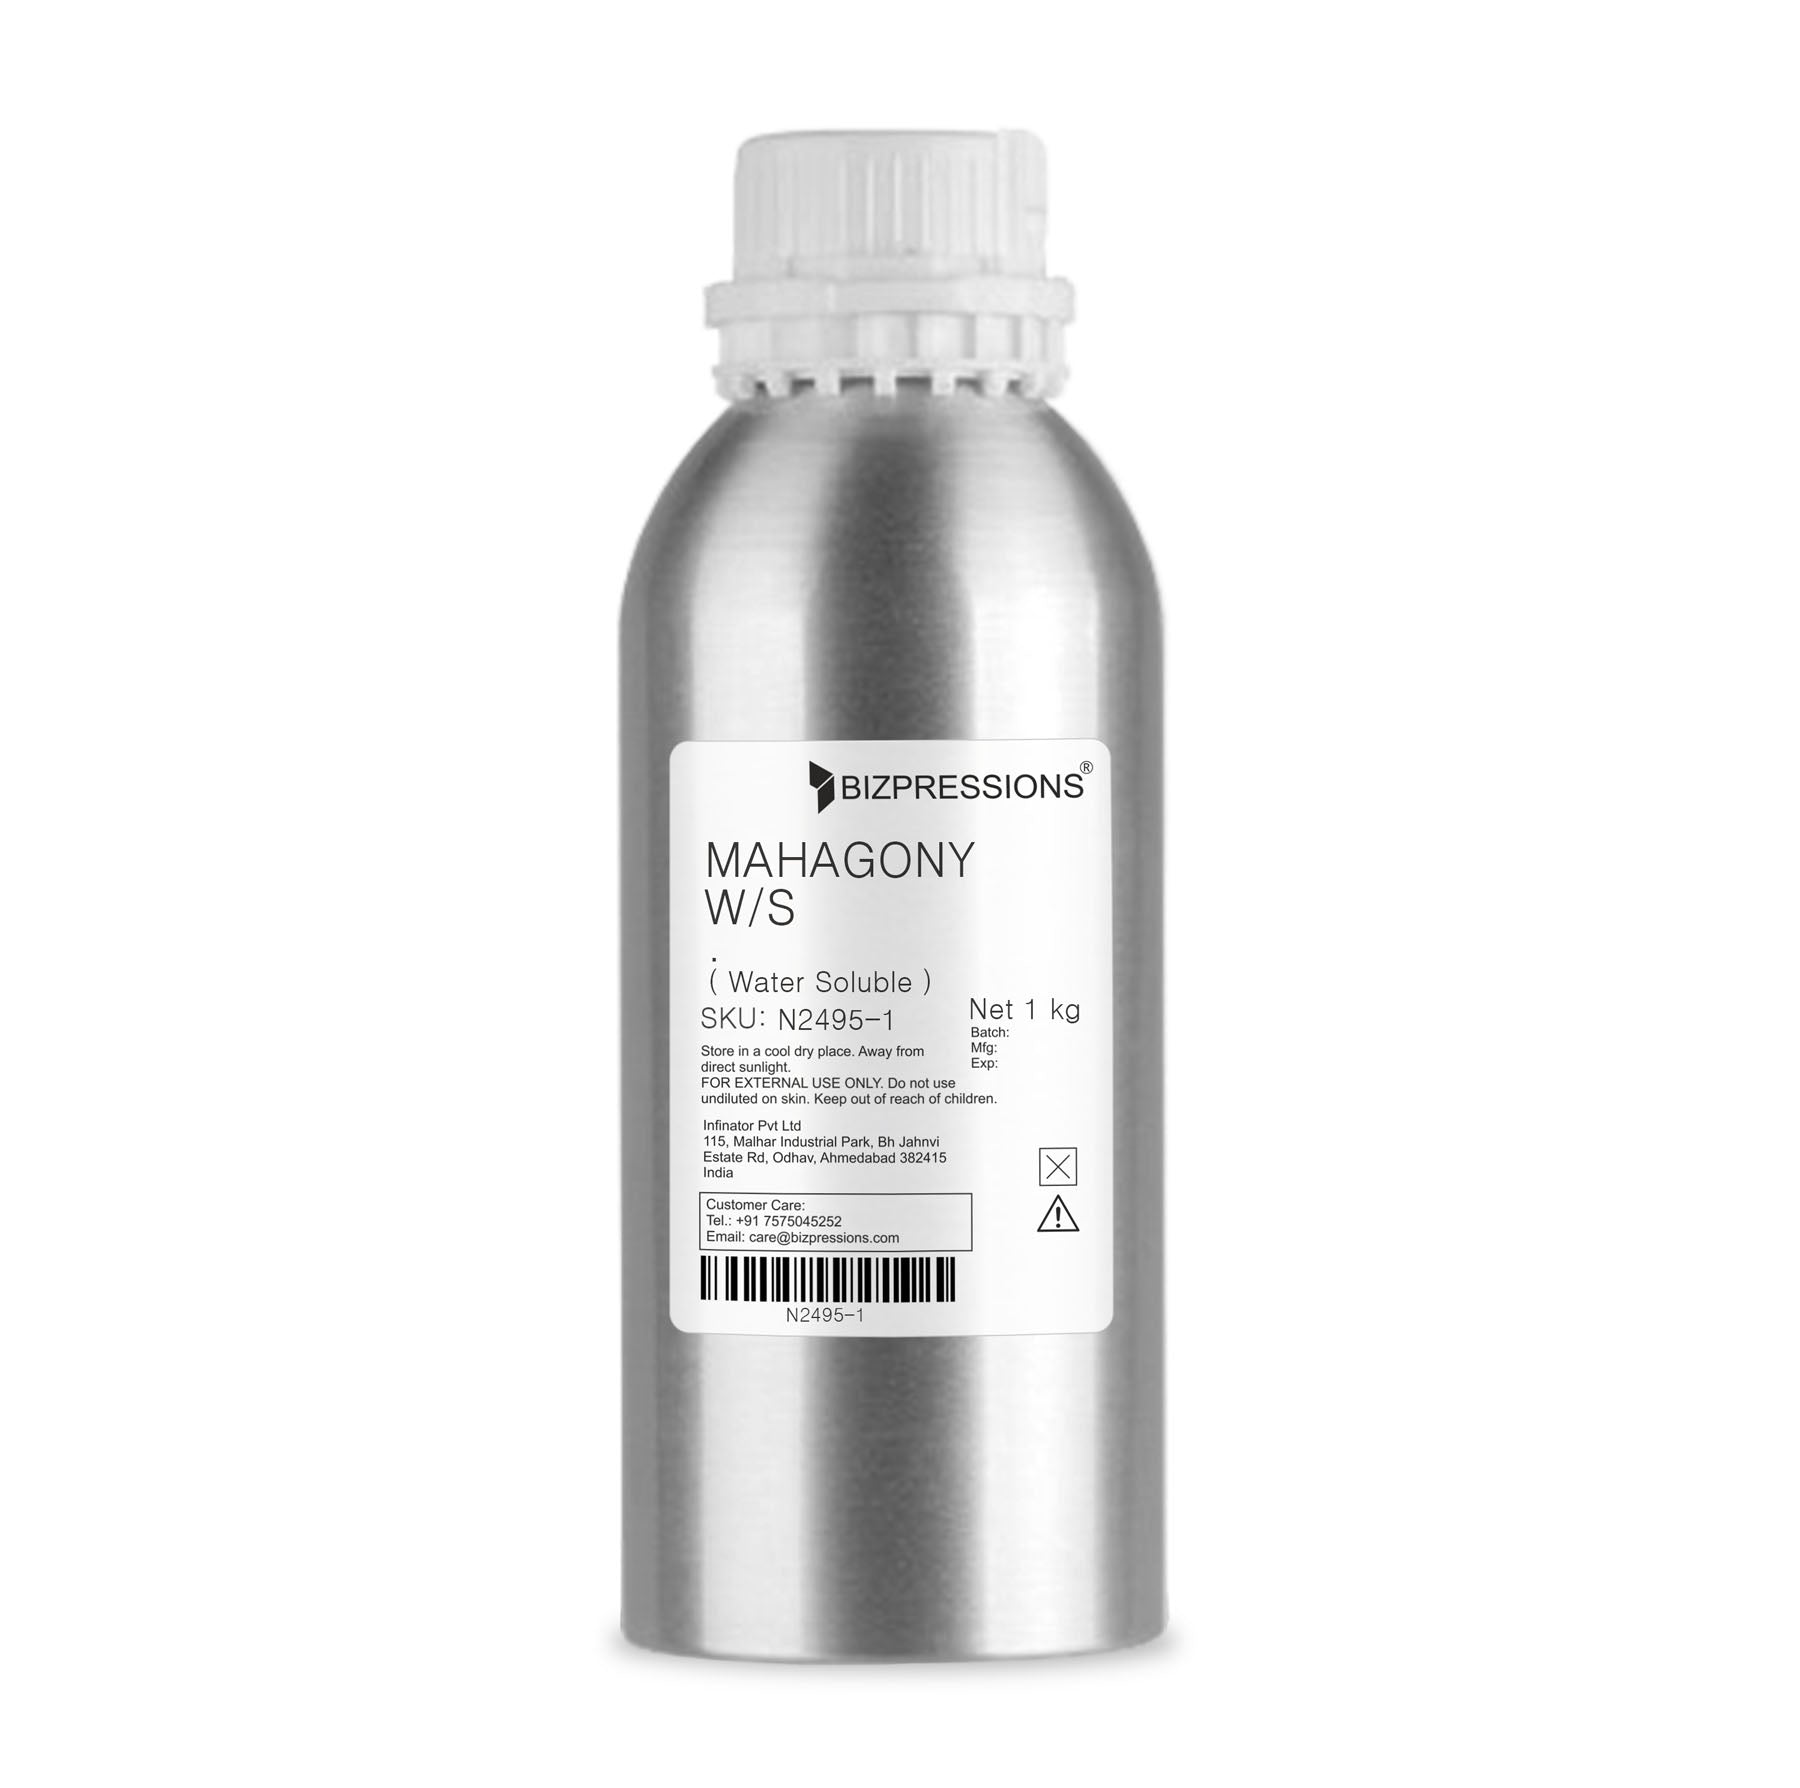 MAHAGONY W/S - Fragrance ( Water Soluble ) - 1 kg